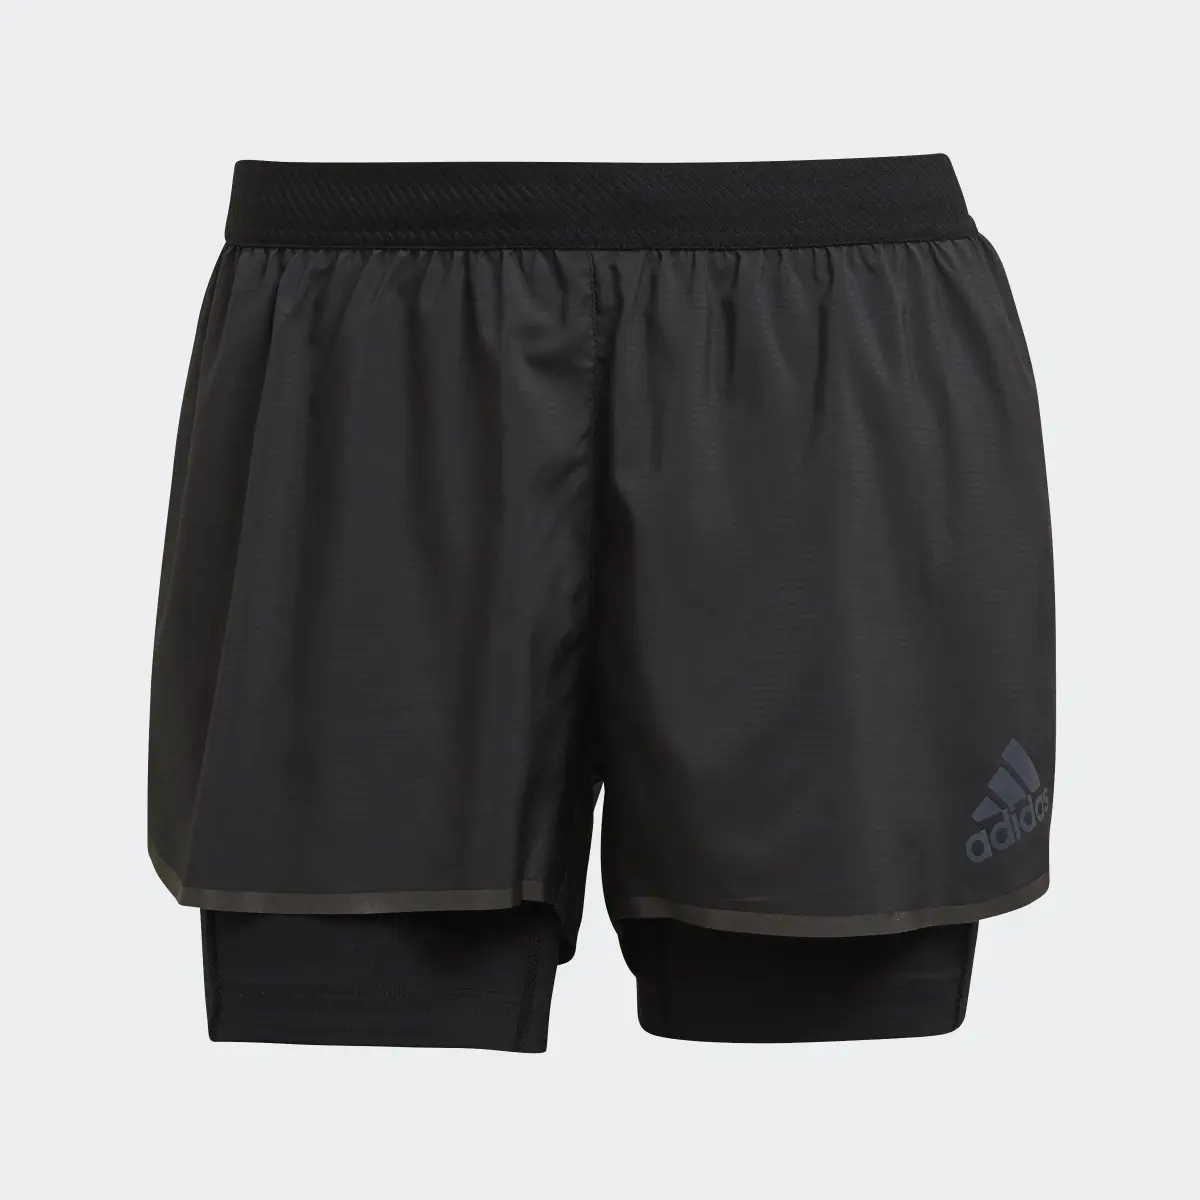 Adidas Adizero Two-in-One Shorts. 1